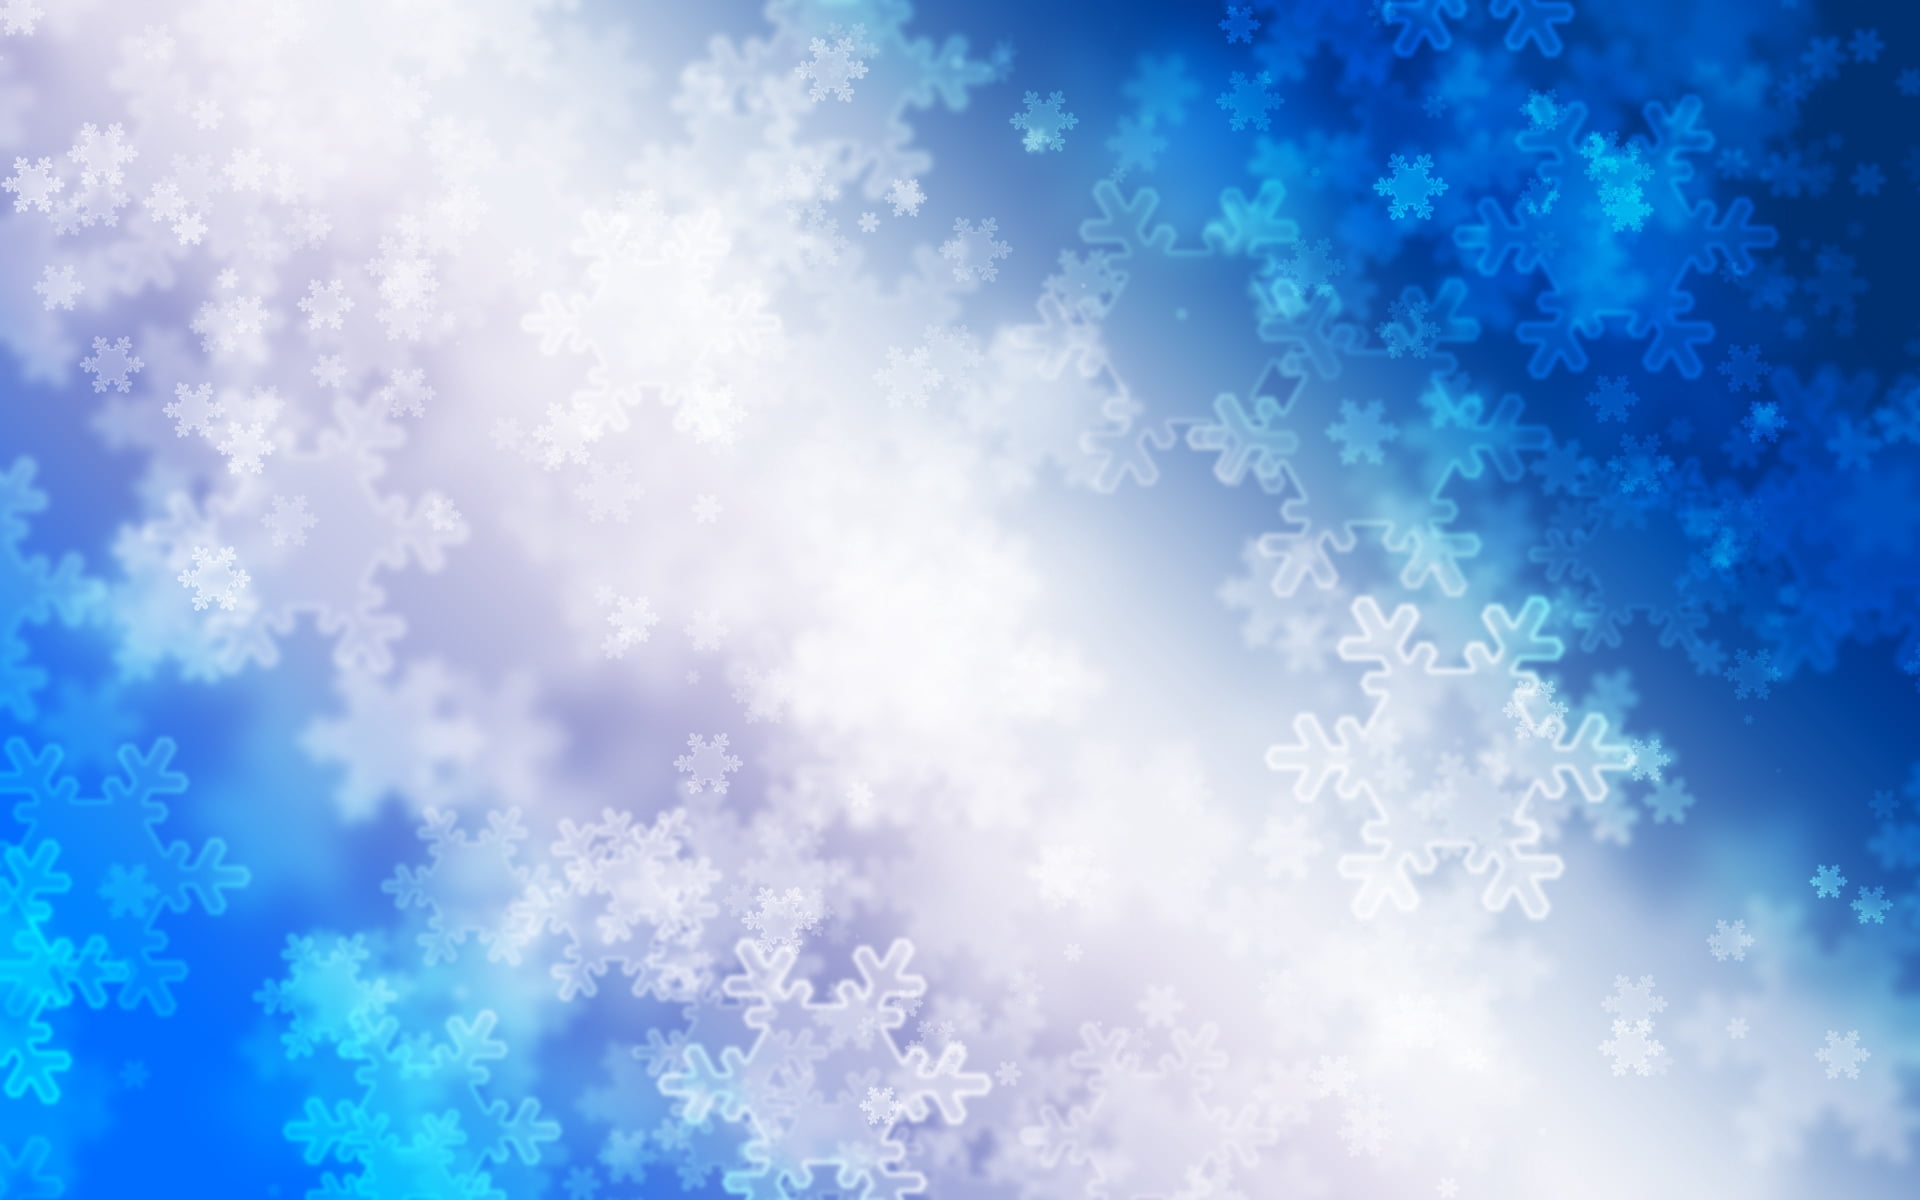 white snowflakes wallpaper, lights, spots, glare, christmas, backgrounds